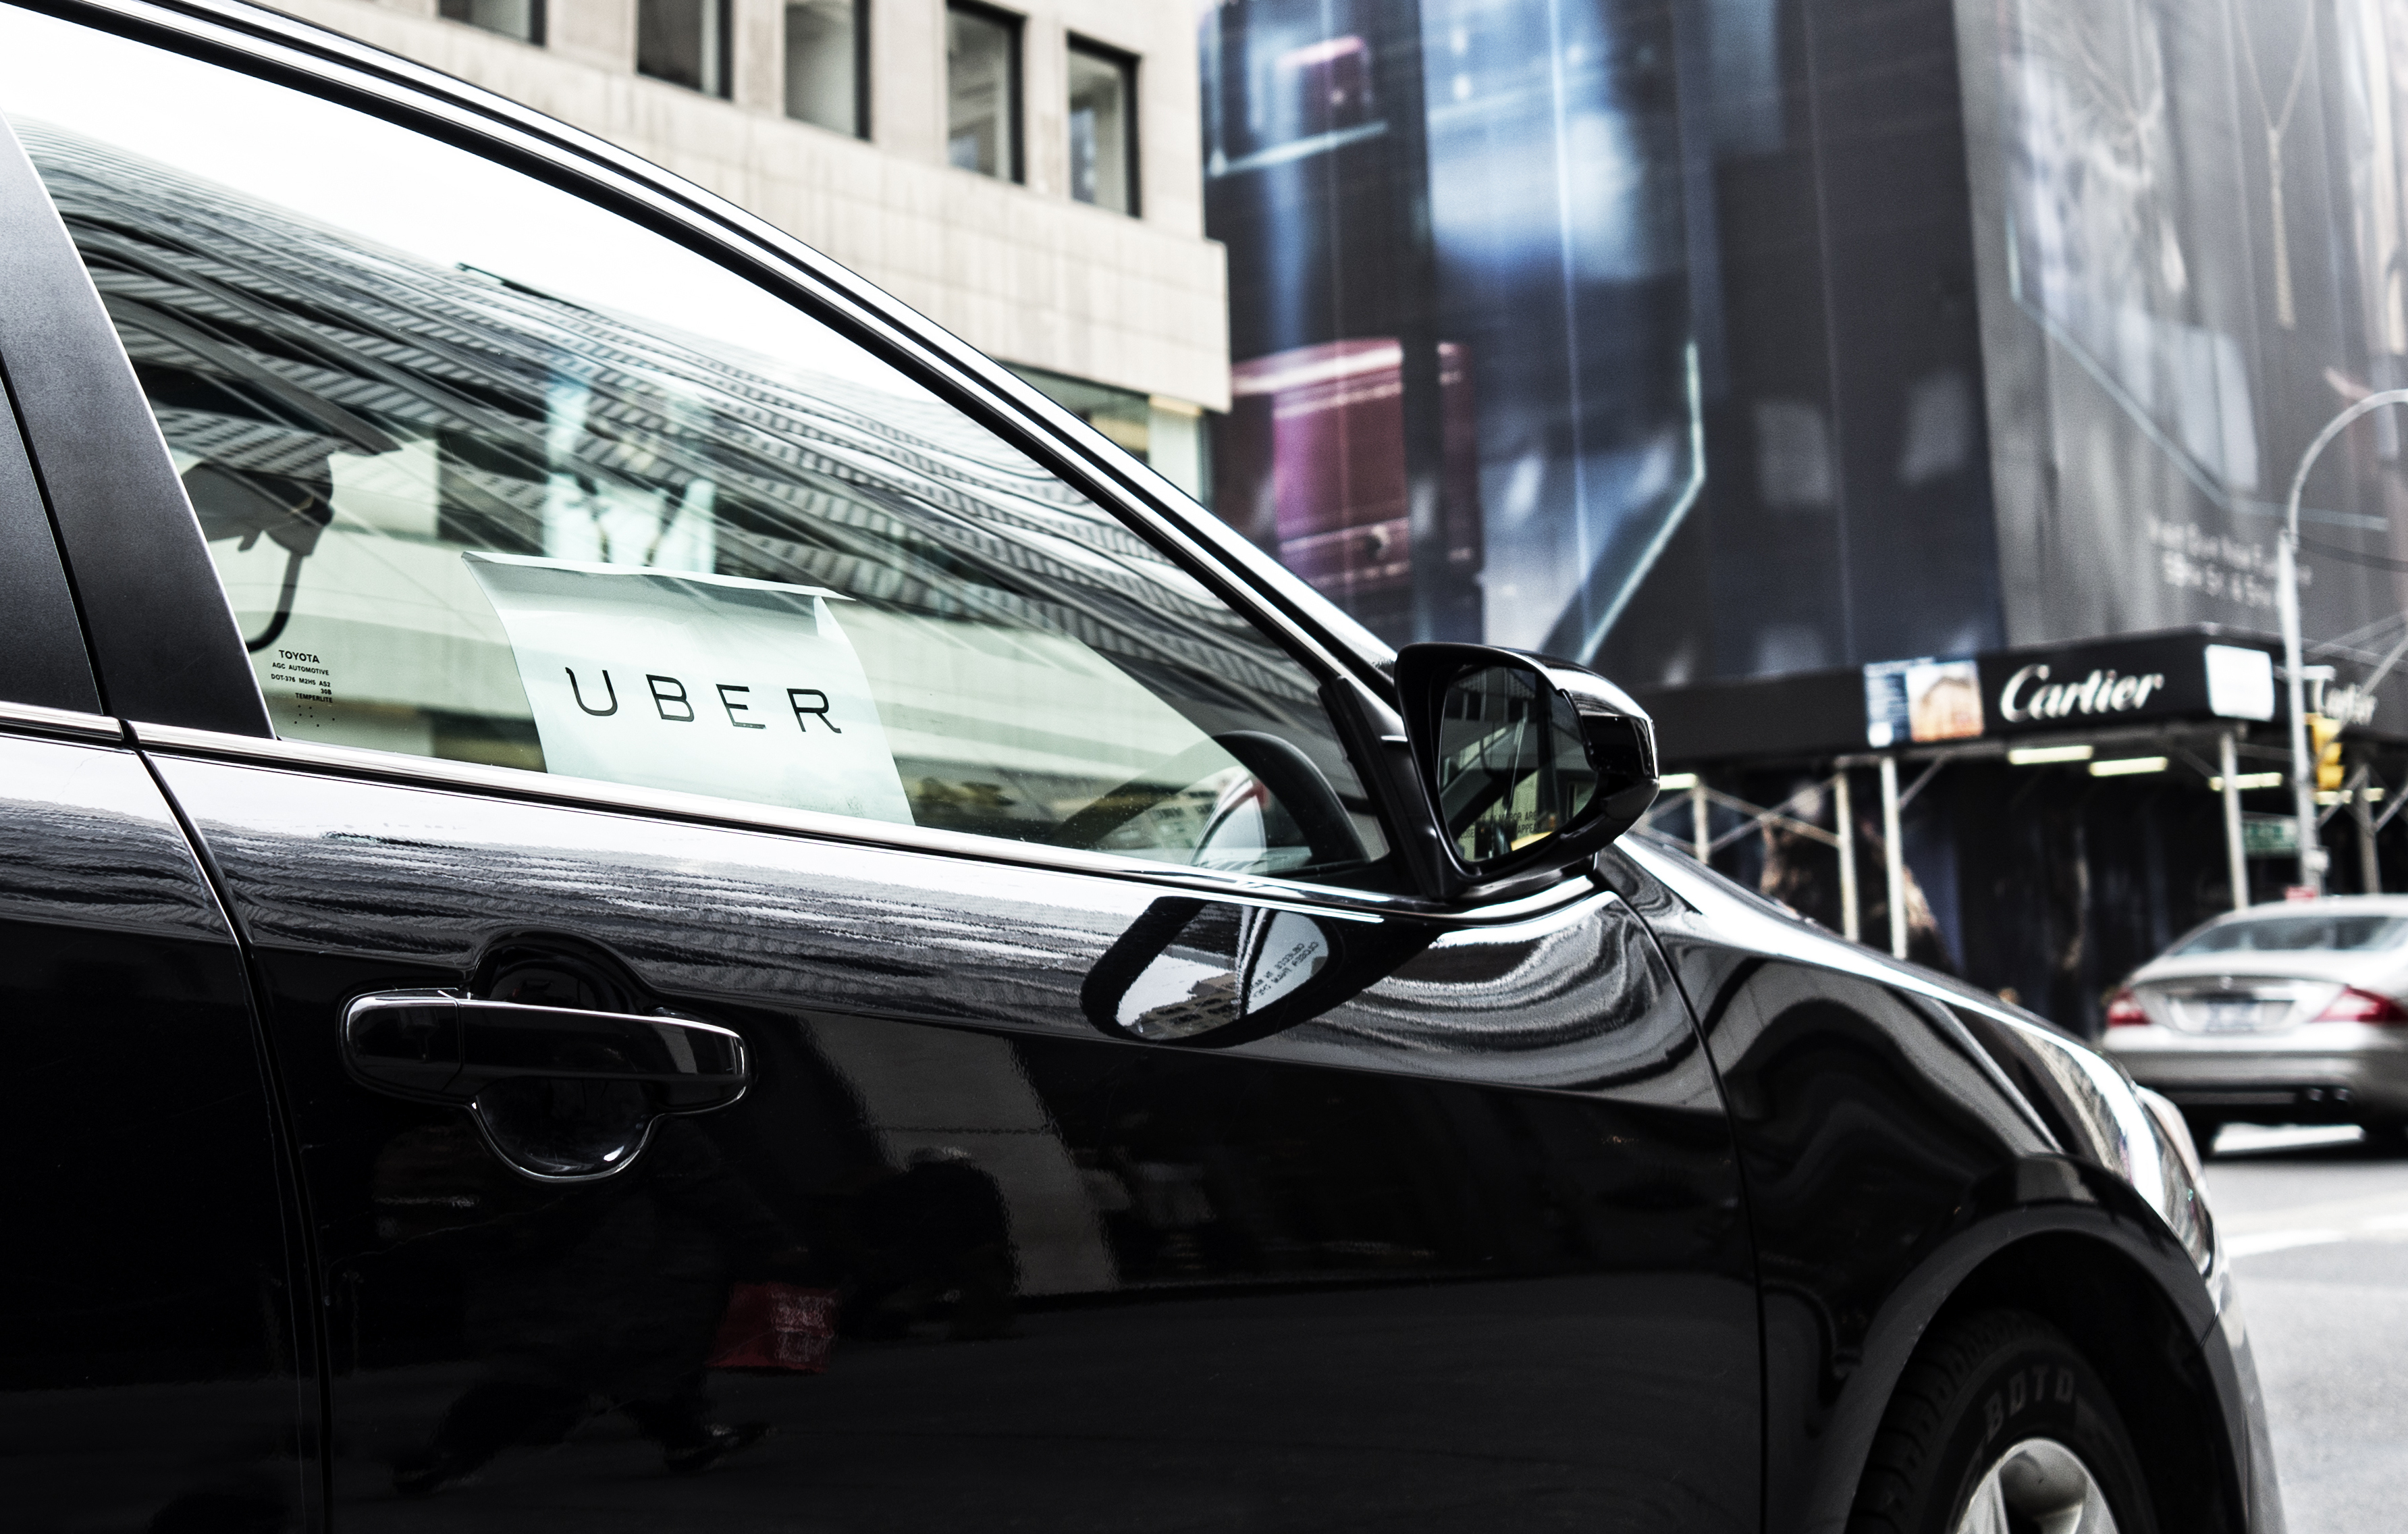 Uber car service in New York City